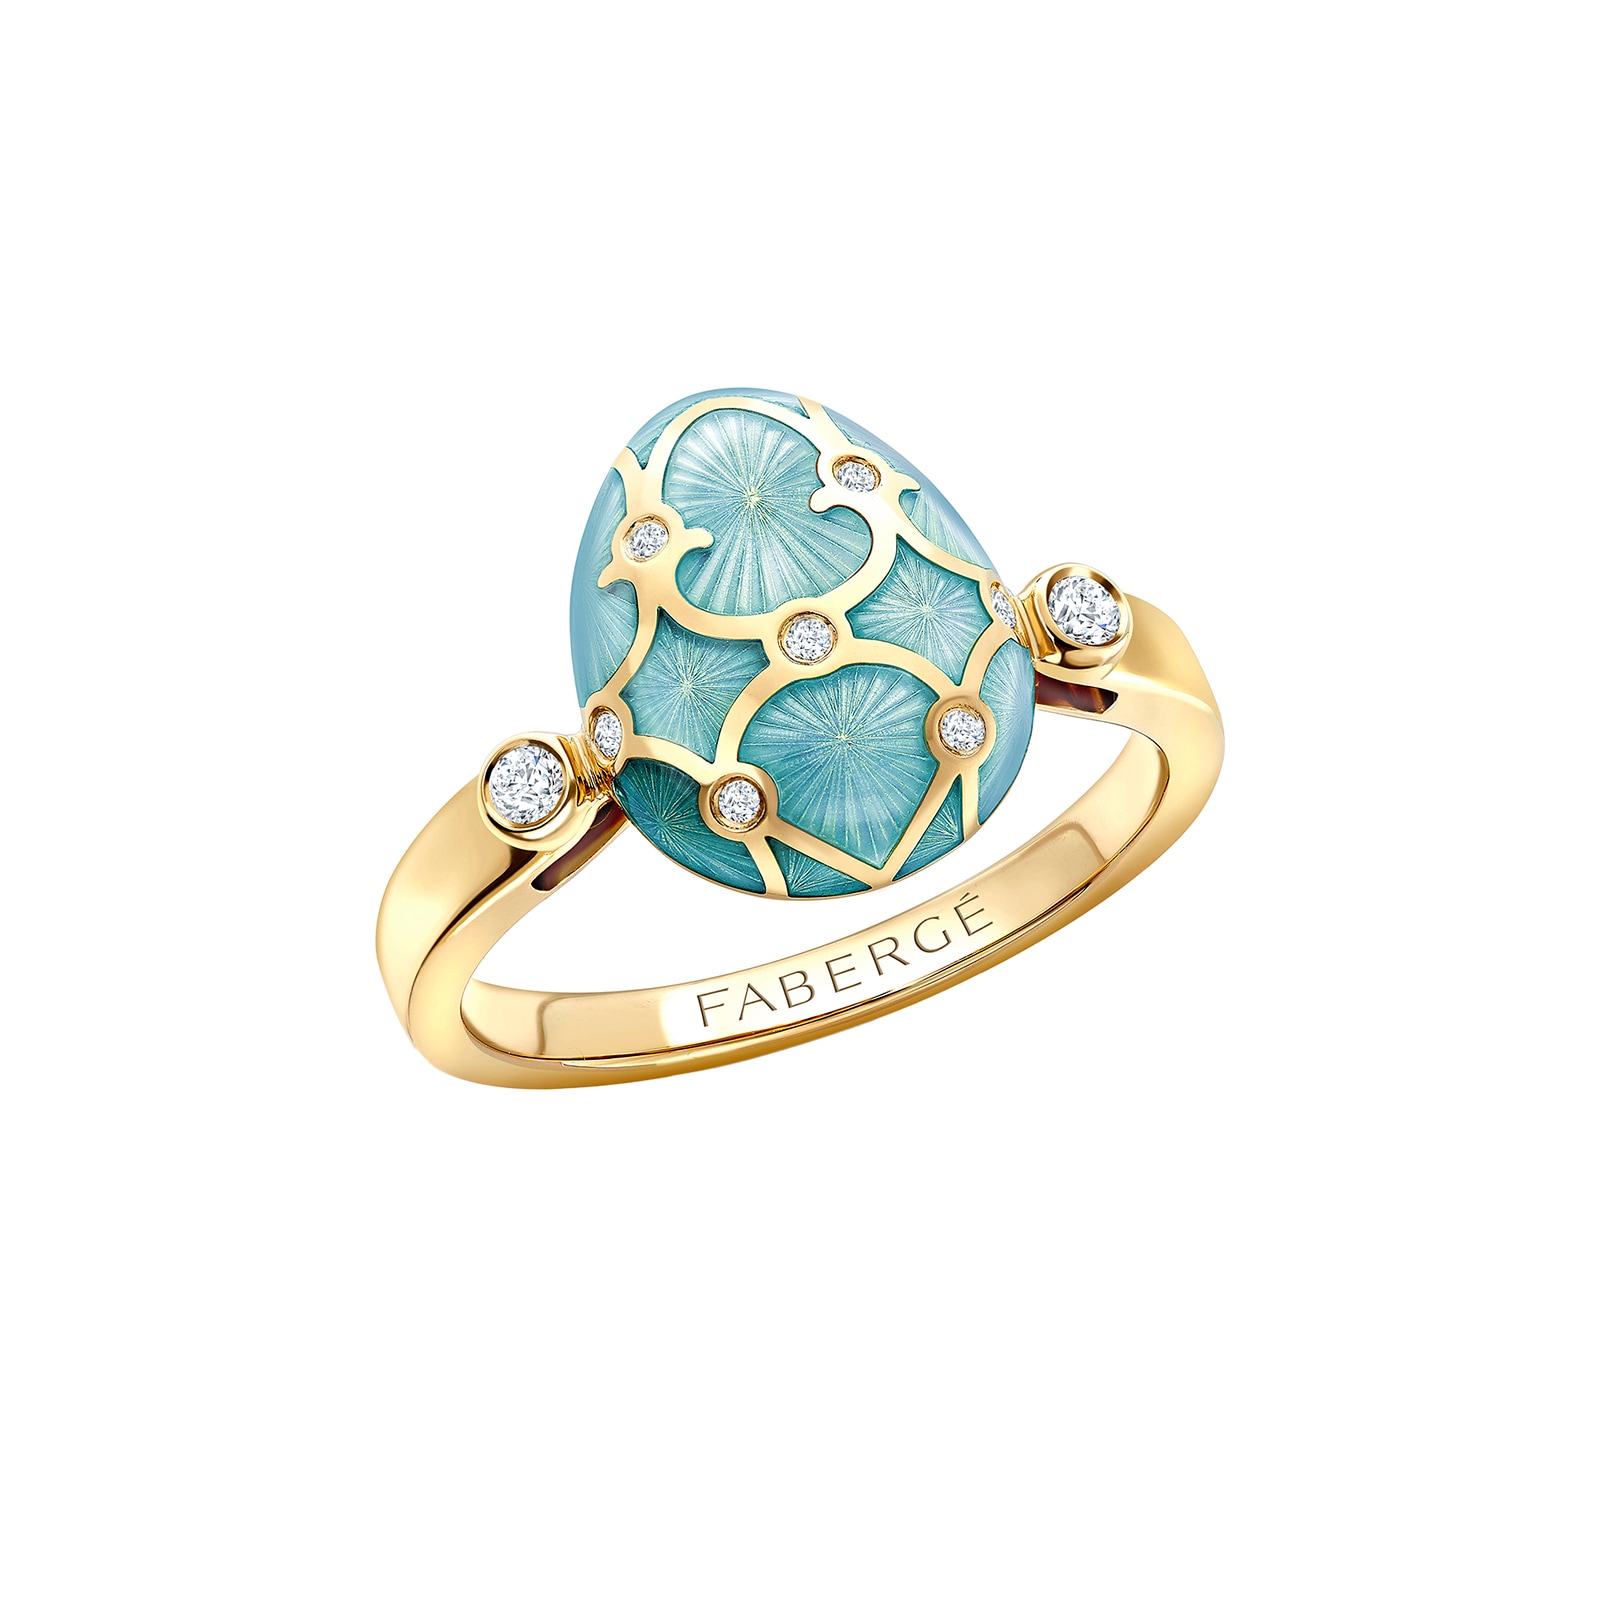 Heritage 18ct Yellow Gold Diamond & Tourquoise Enamel Egg Ring - Ring Size P